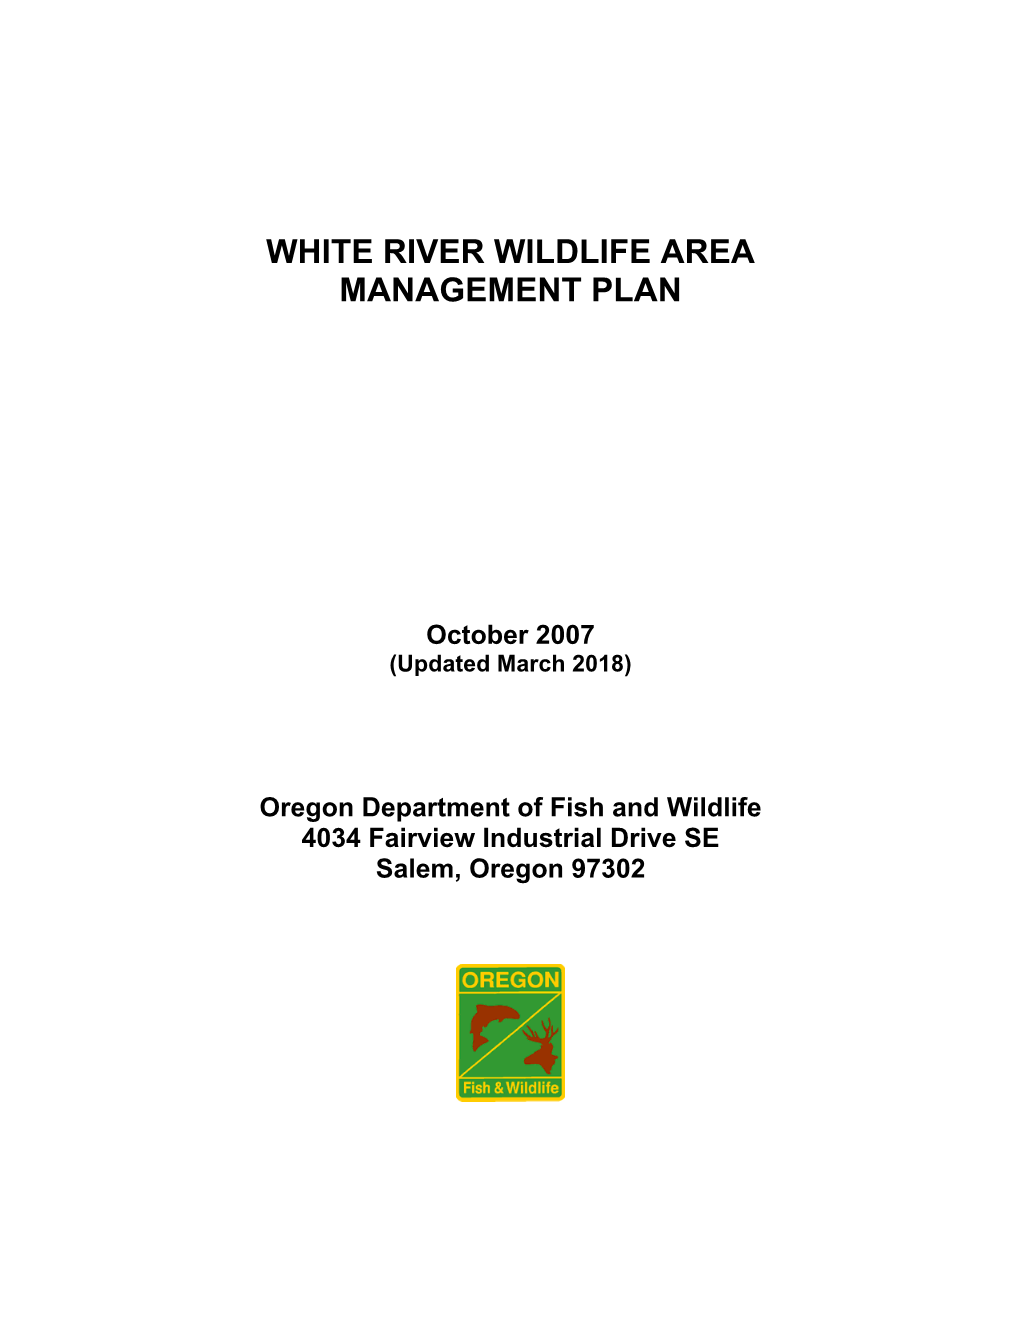 White River Wildlife Area Management Plan